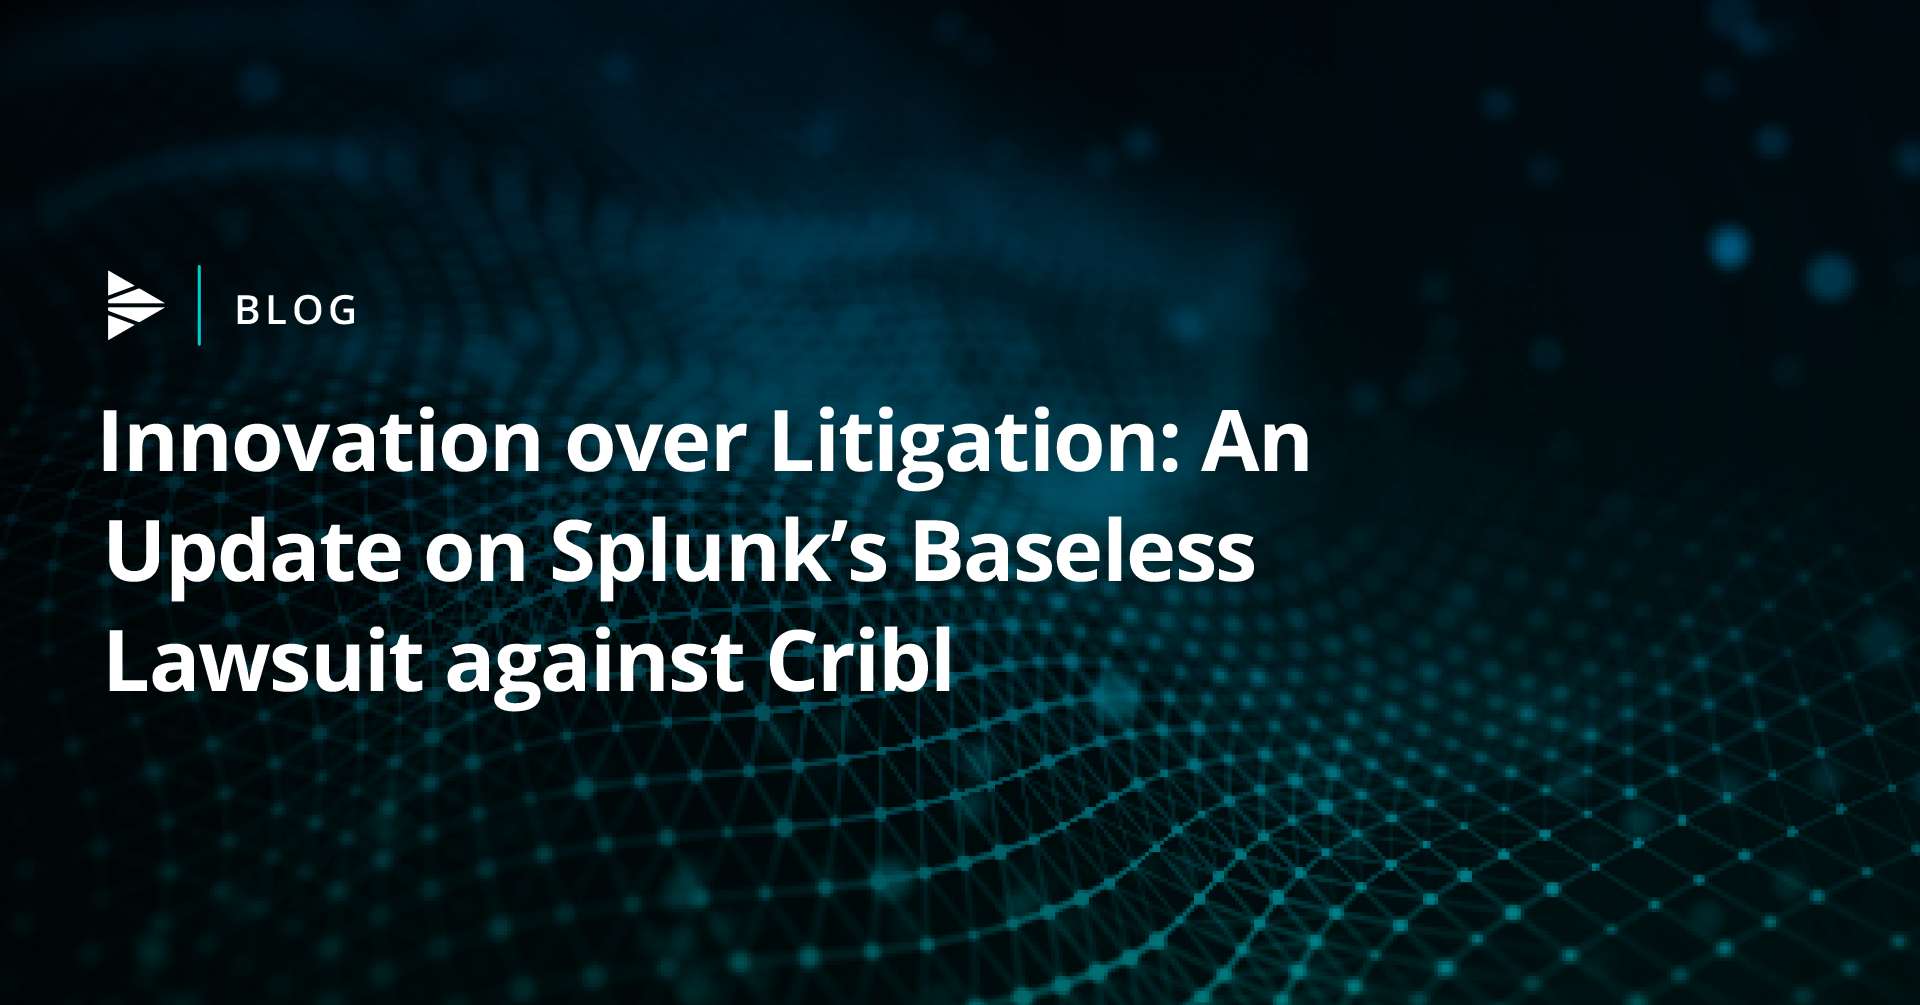 Cribl Splunk Lawsuit Update